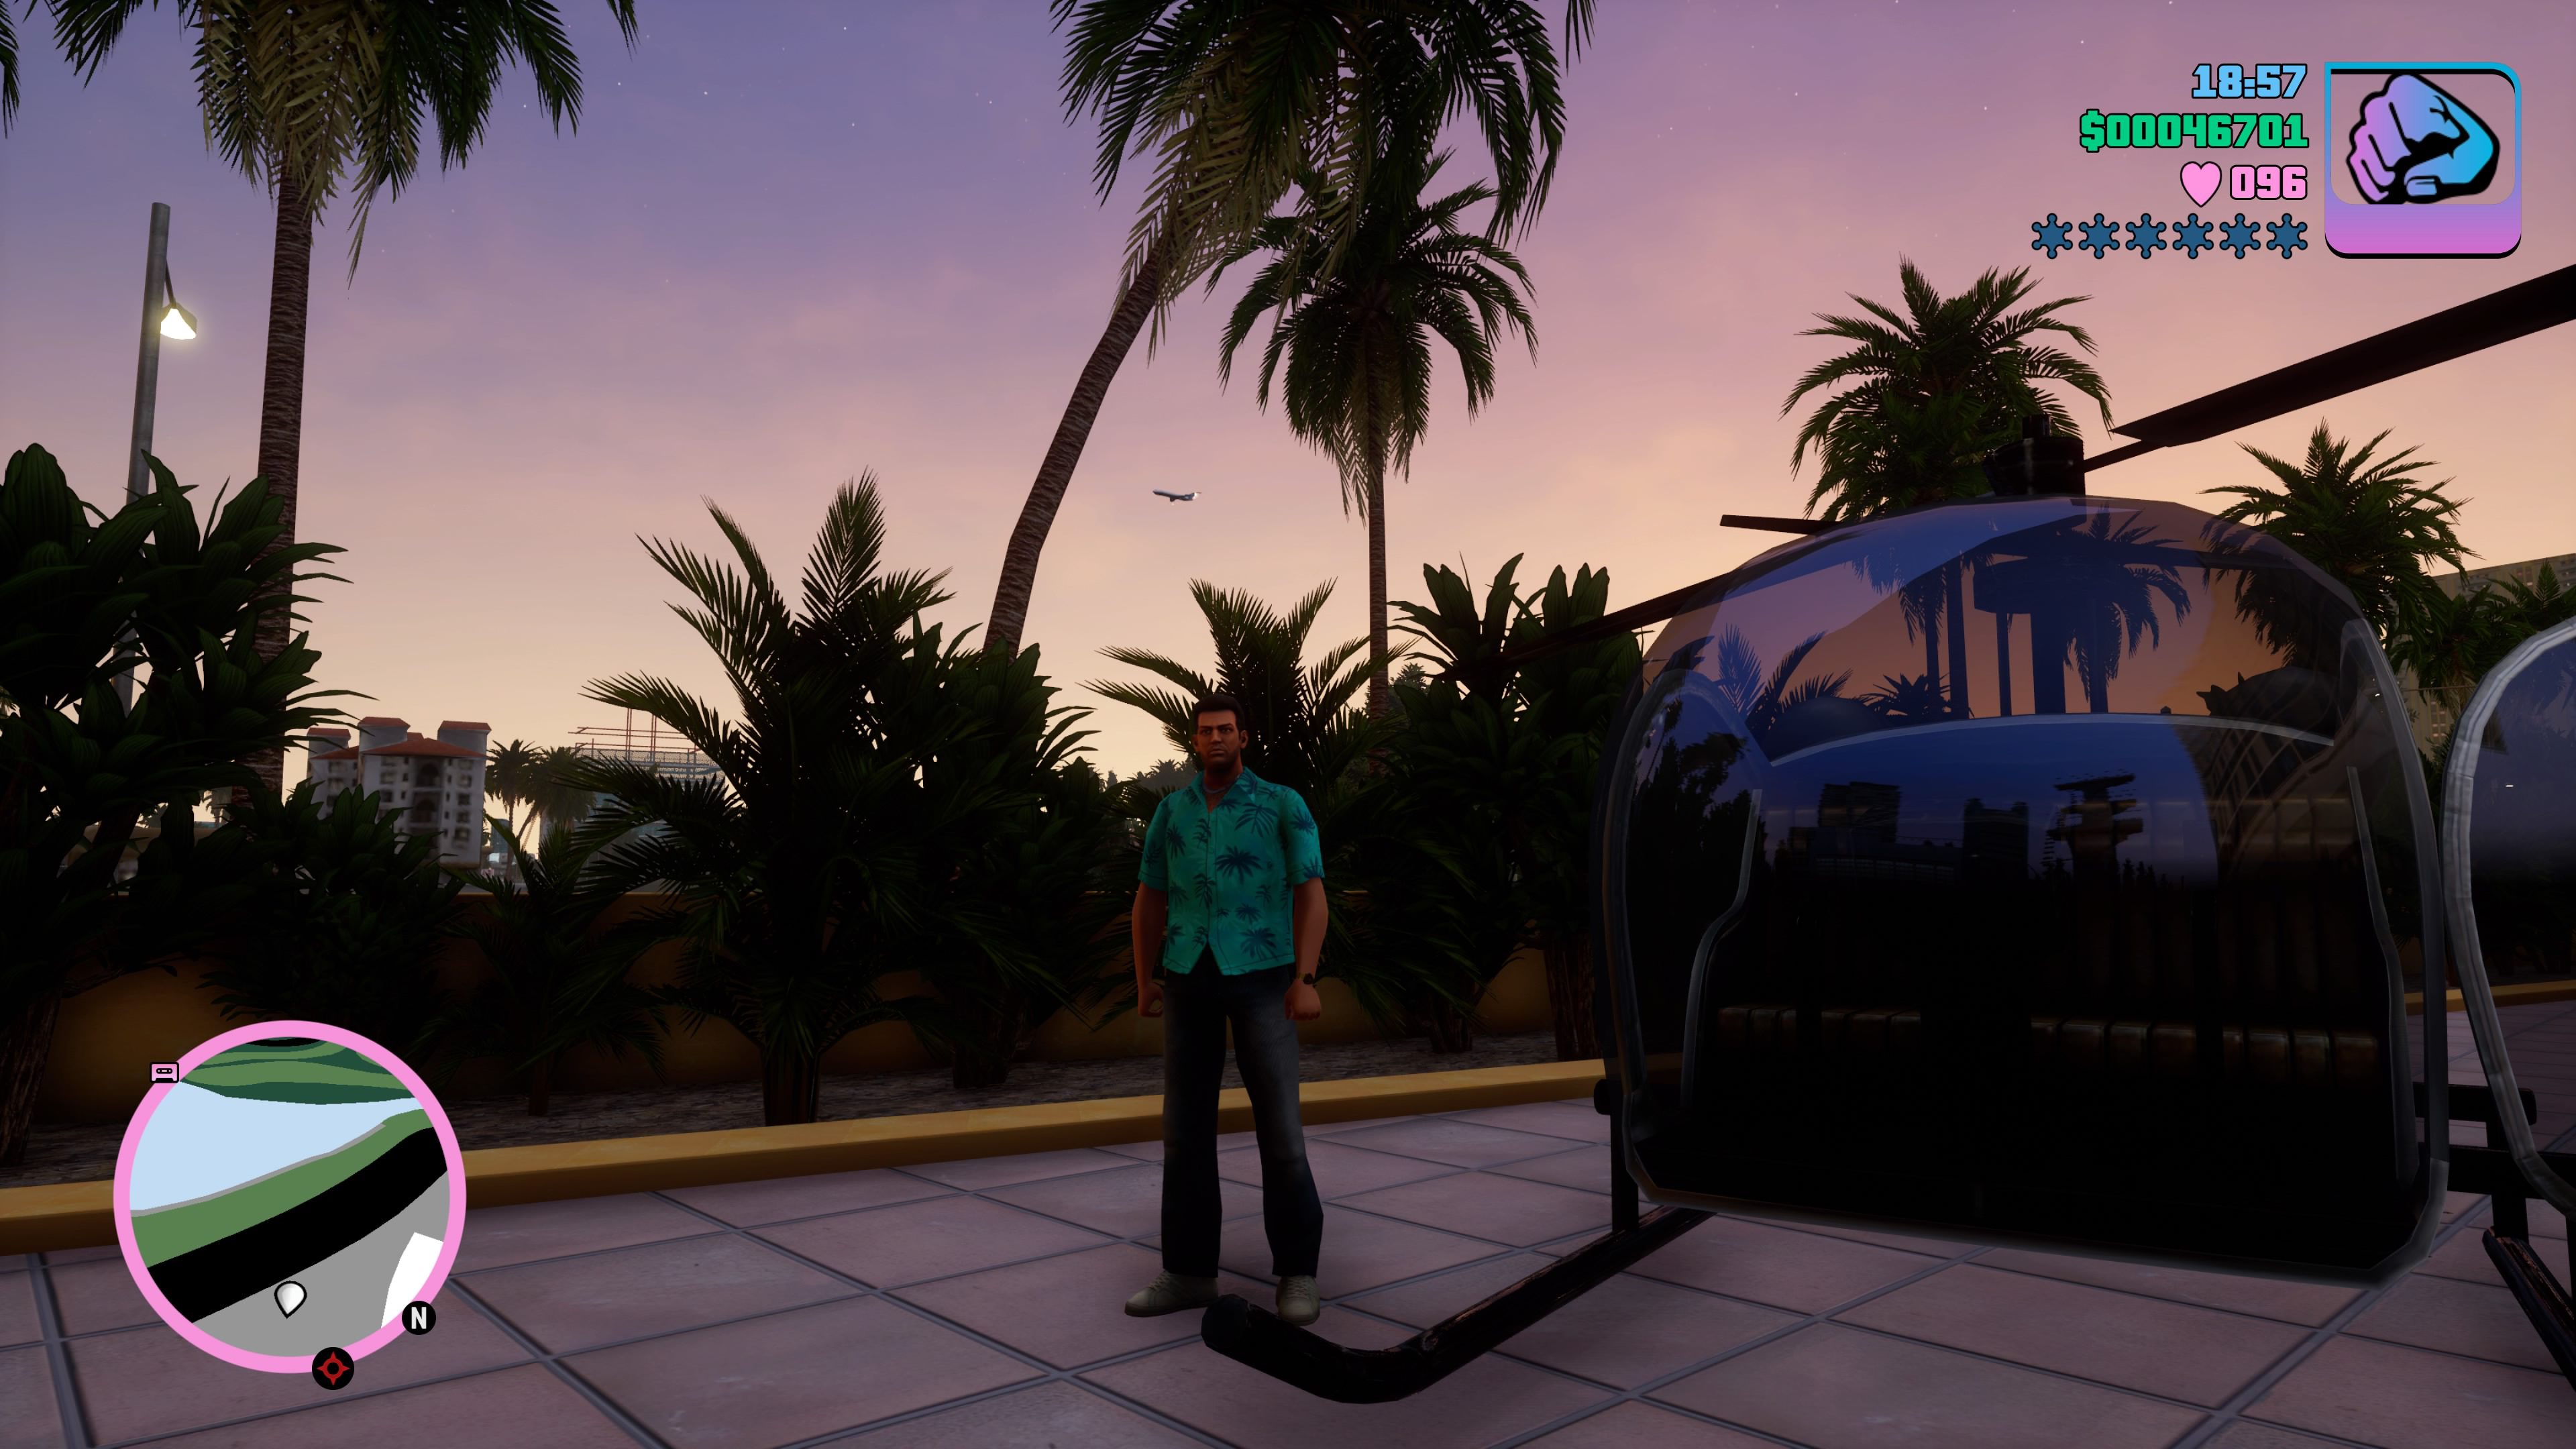 Grand Theft Auto: Vice City (PS2) / Grand Theft Auto: Vice City –  Definitive Edition (PS4) Review – Hogan Reviews